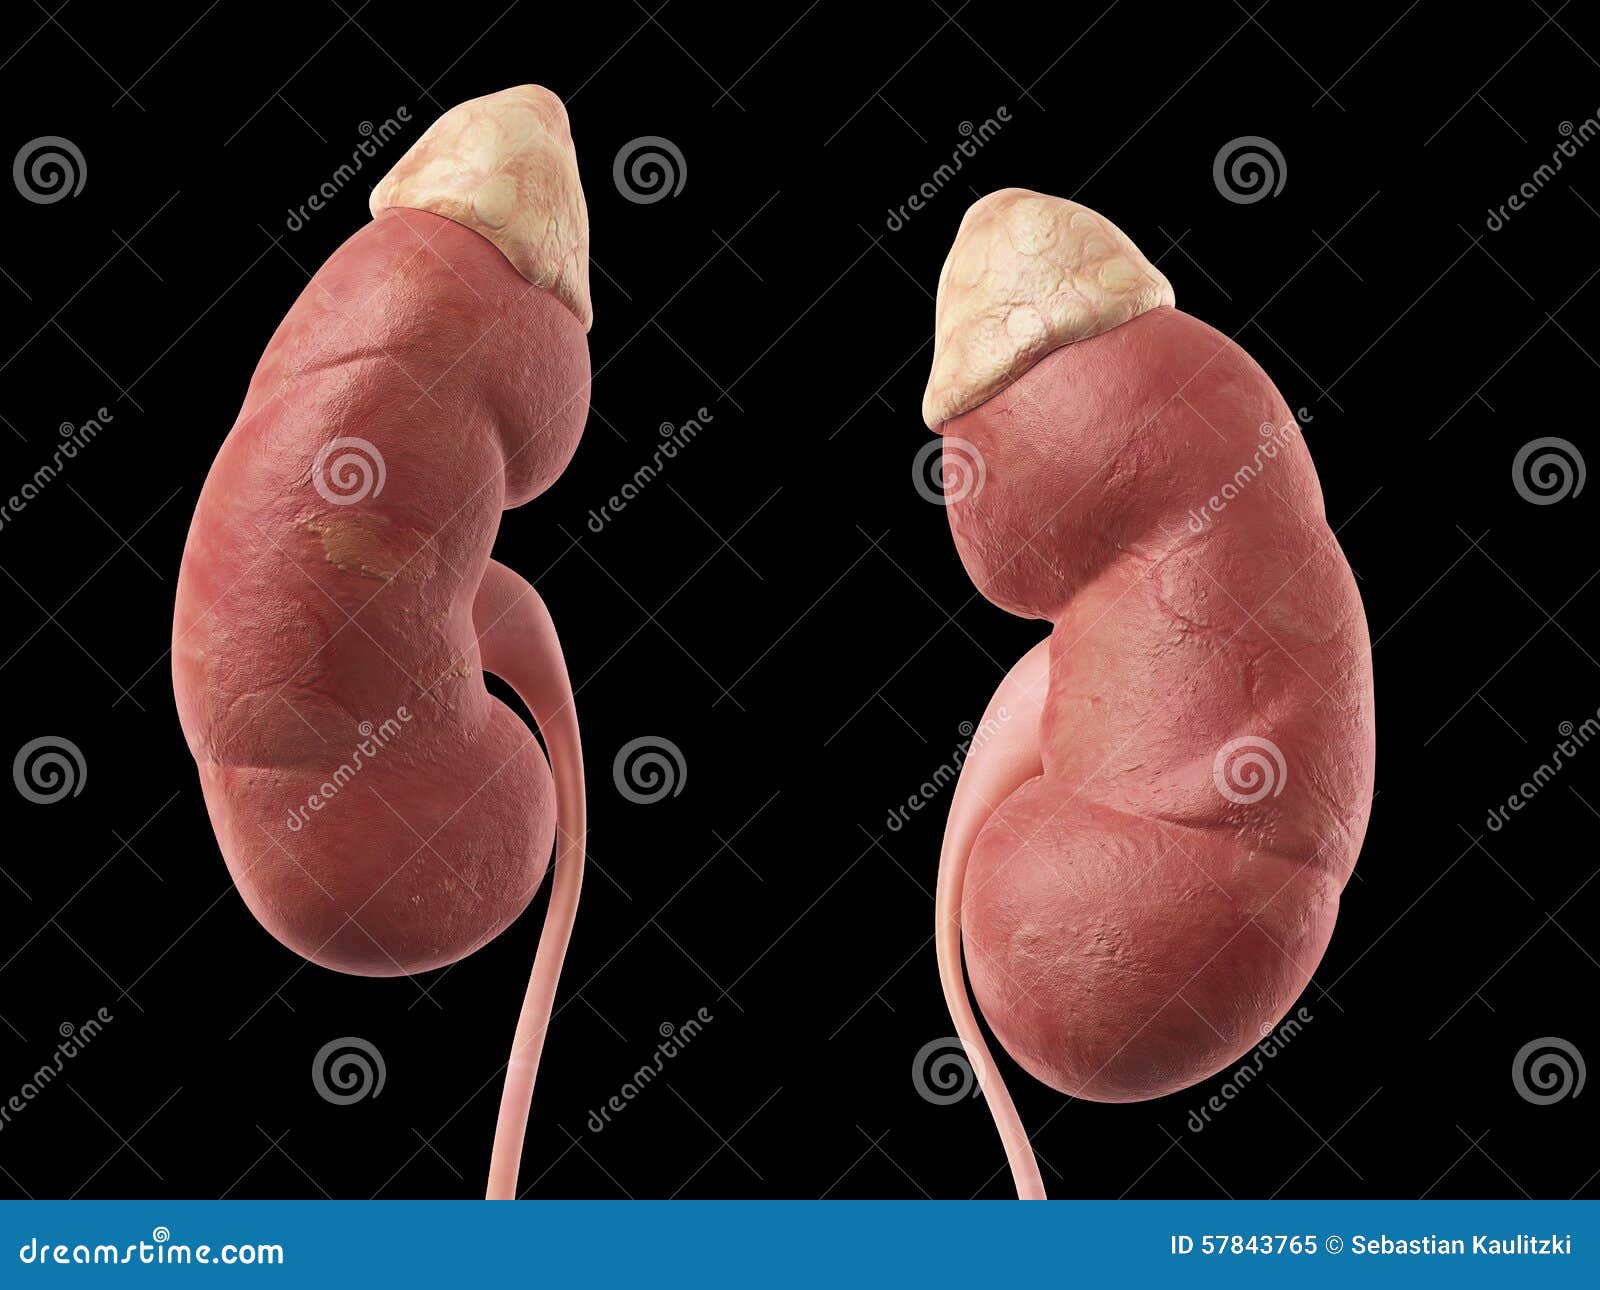 The kidneys stock illustration. Illustration of anterior - 57843765